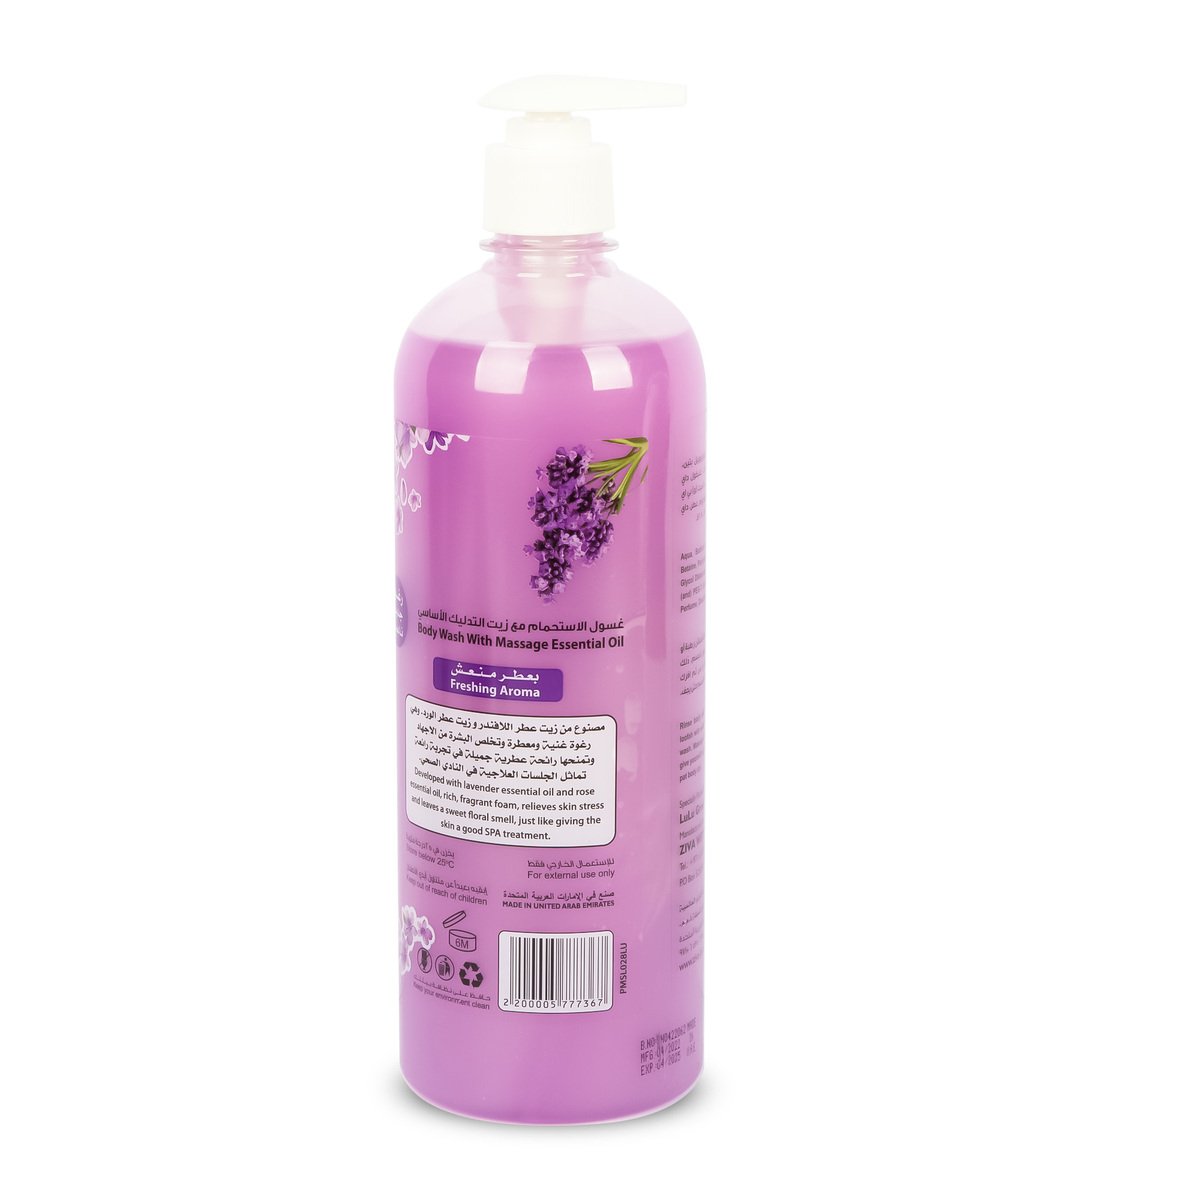 Rosa Bella Lavender Perfume Body Wash 850 ml